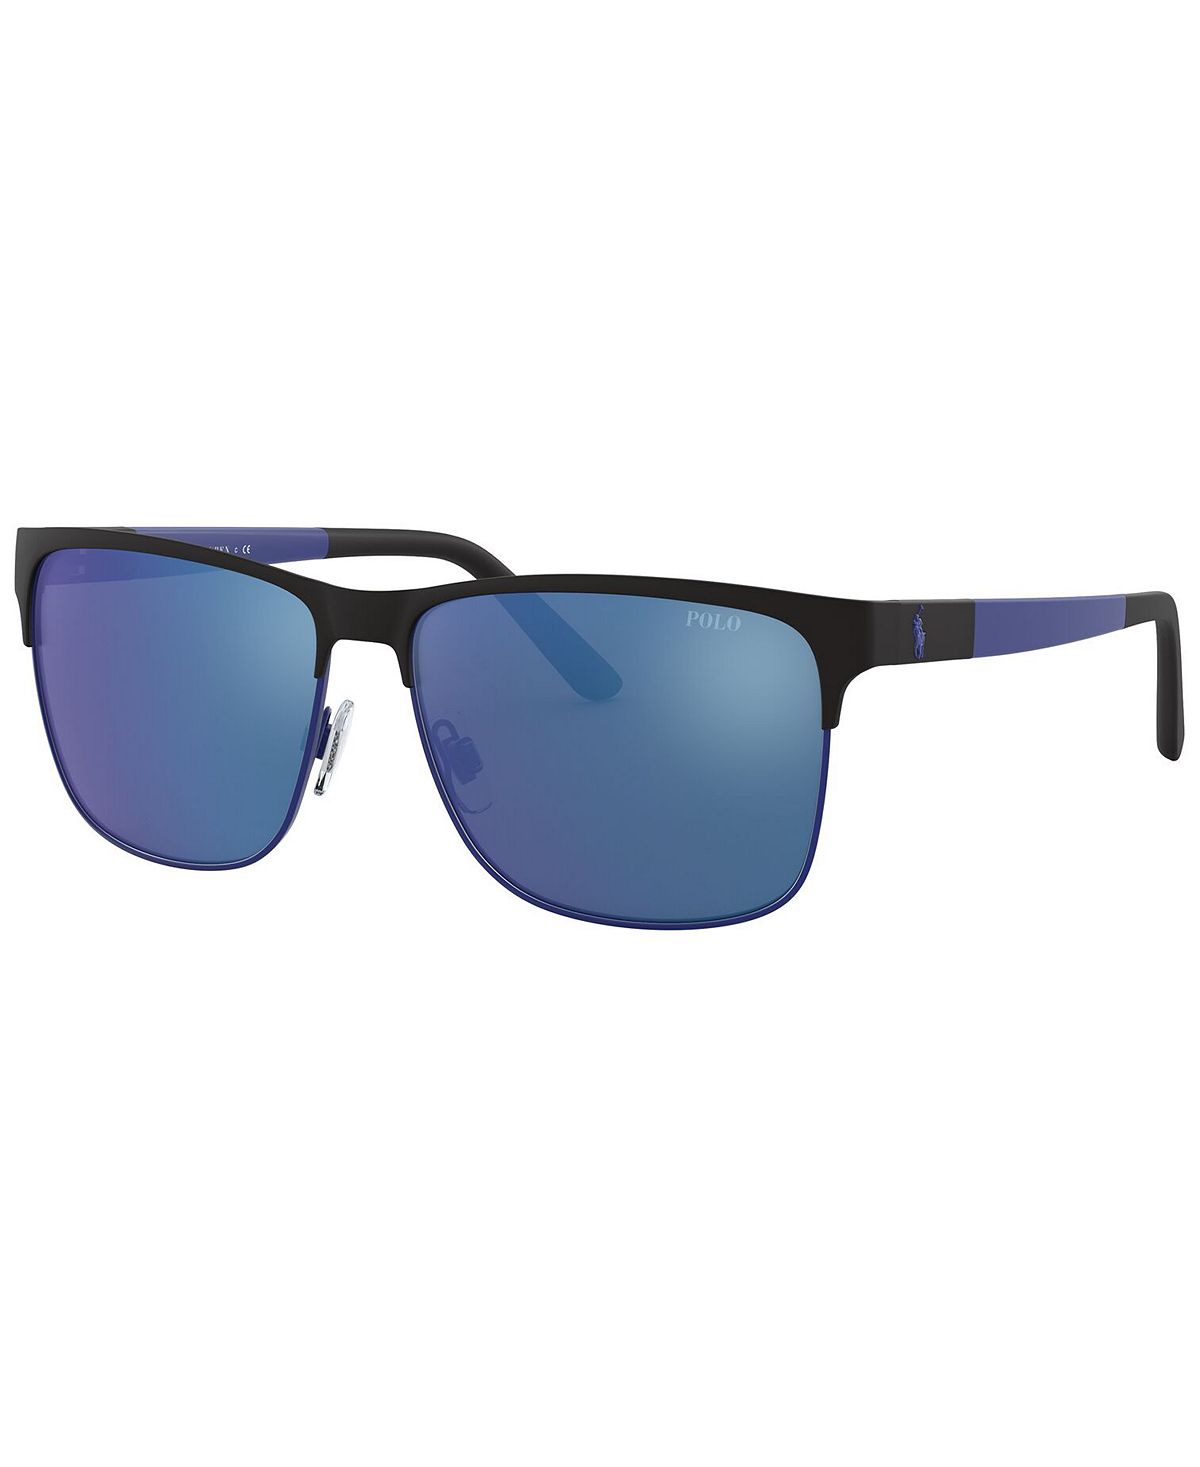 Солнцезащитные очки, PH3128 57 Polo Ralph Lauren цена и фото